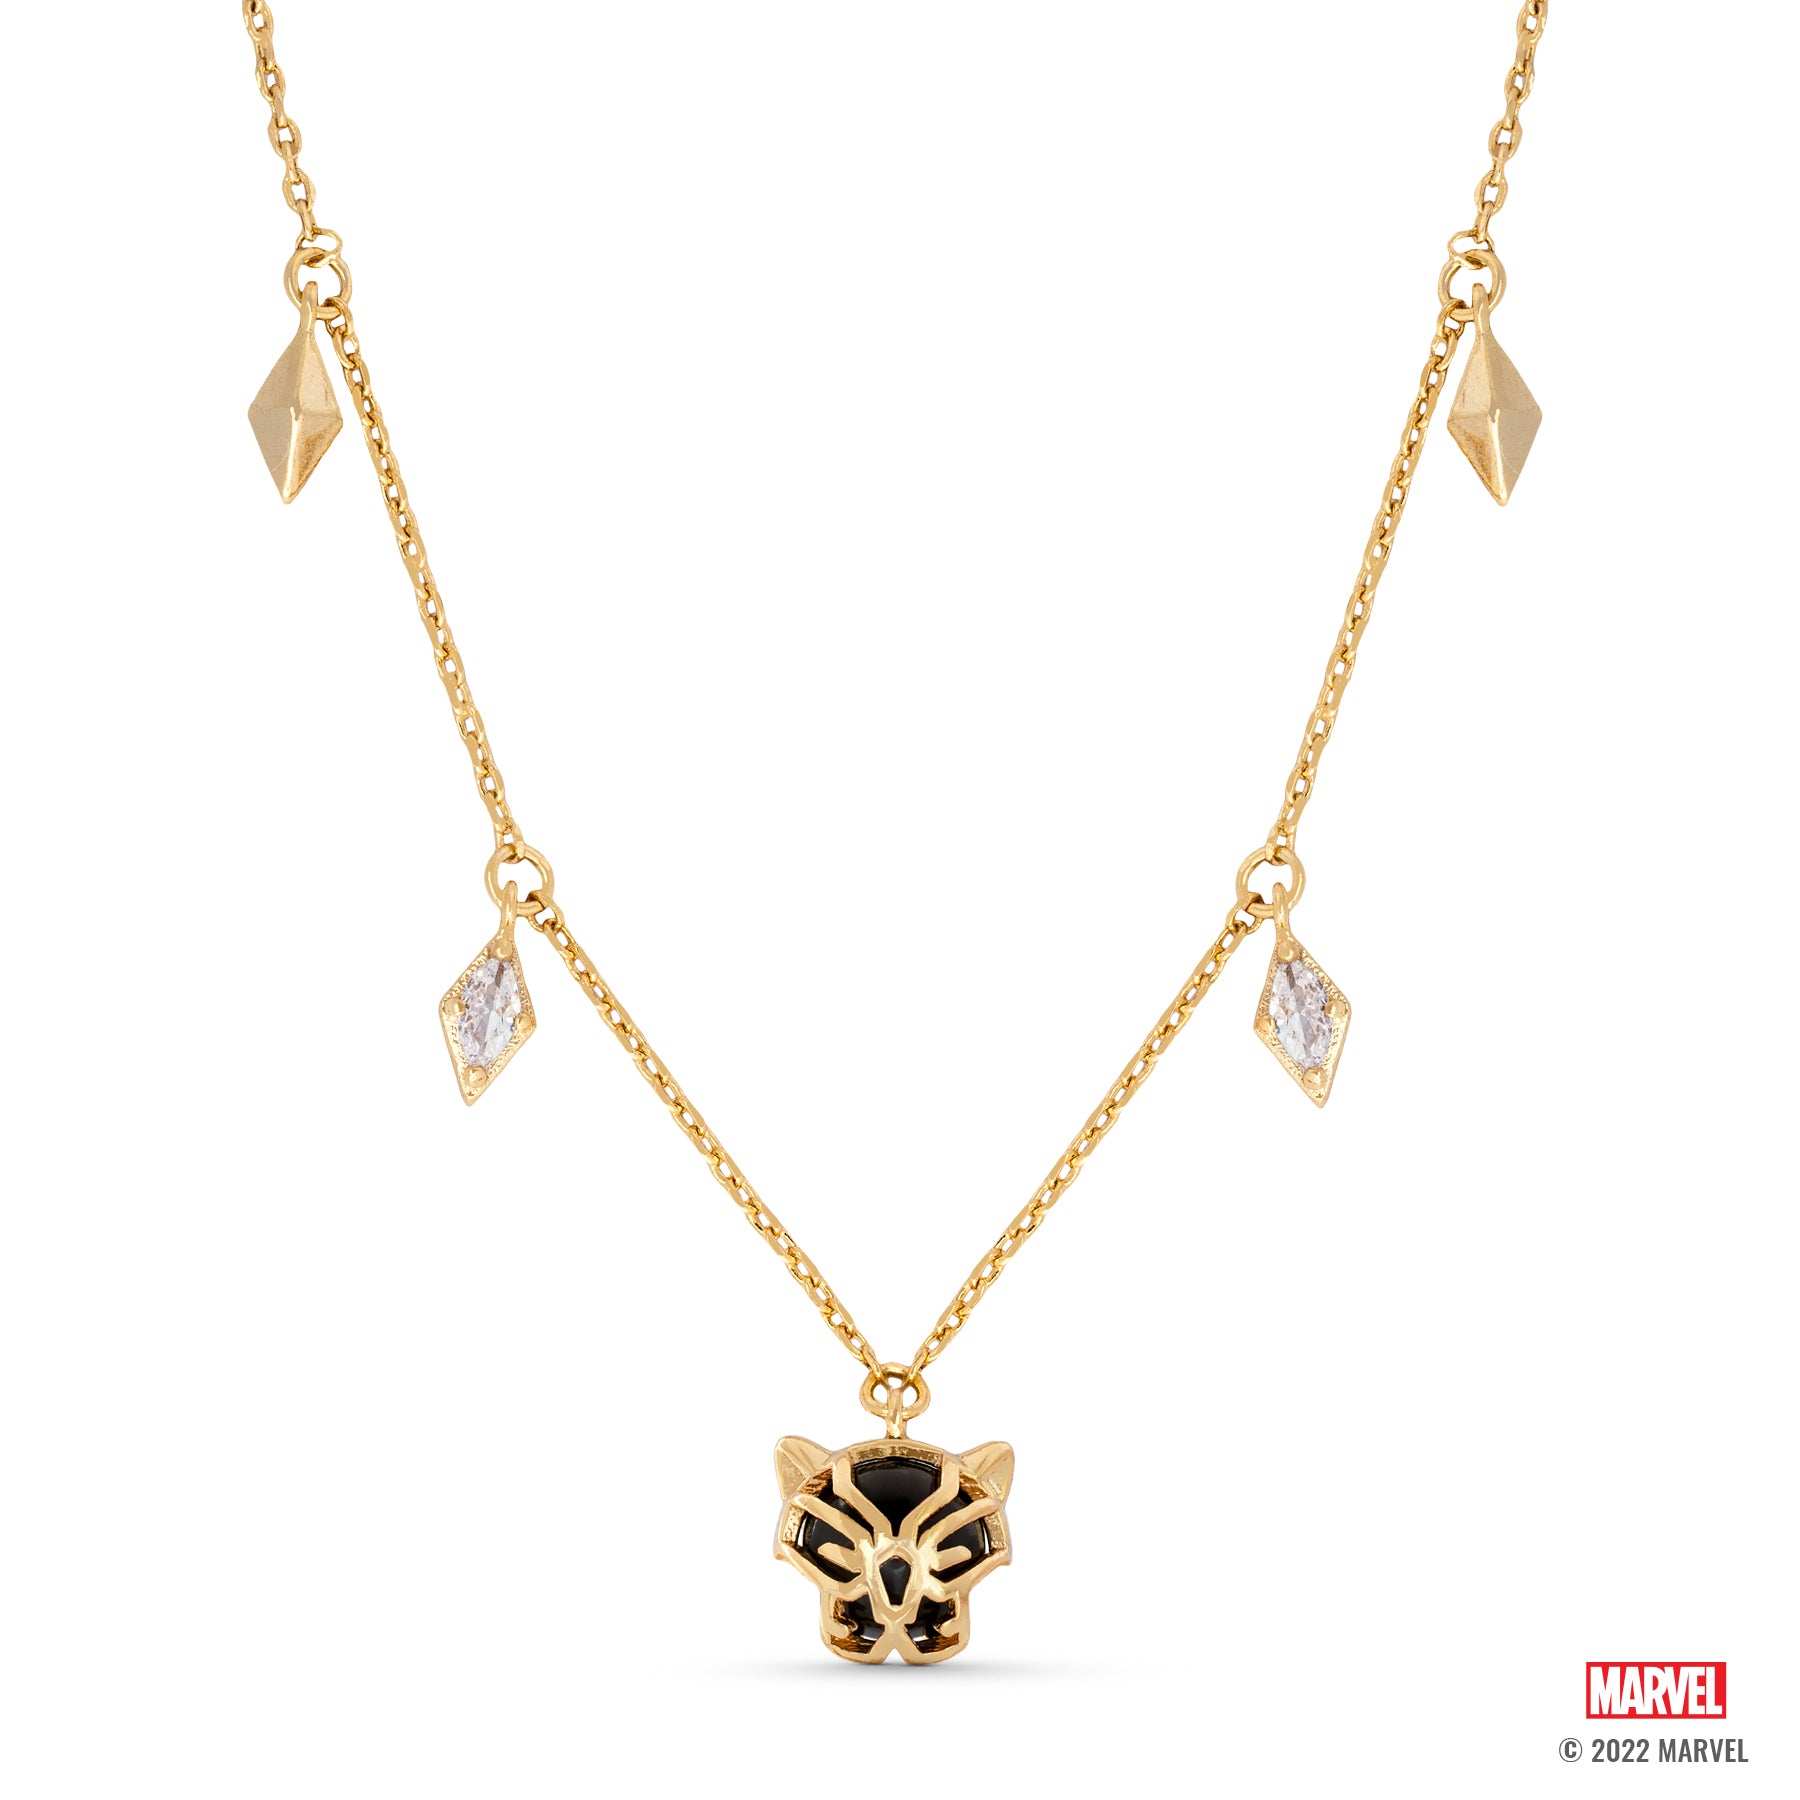 Marvel's Black Panther Necklace